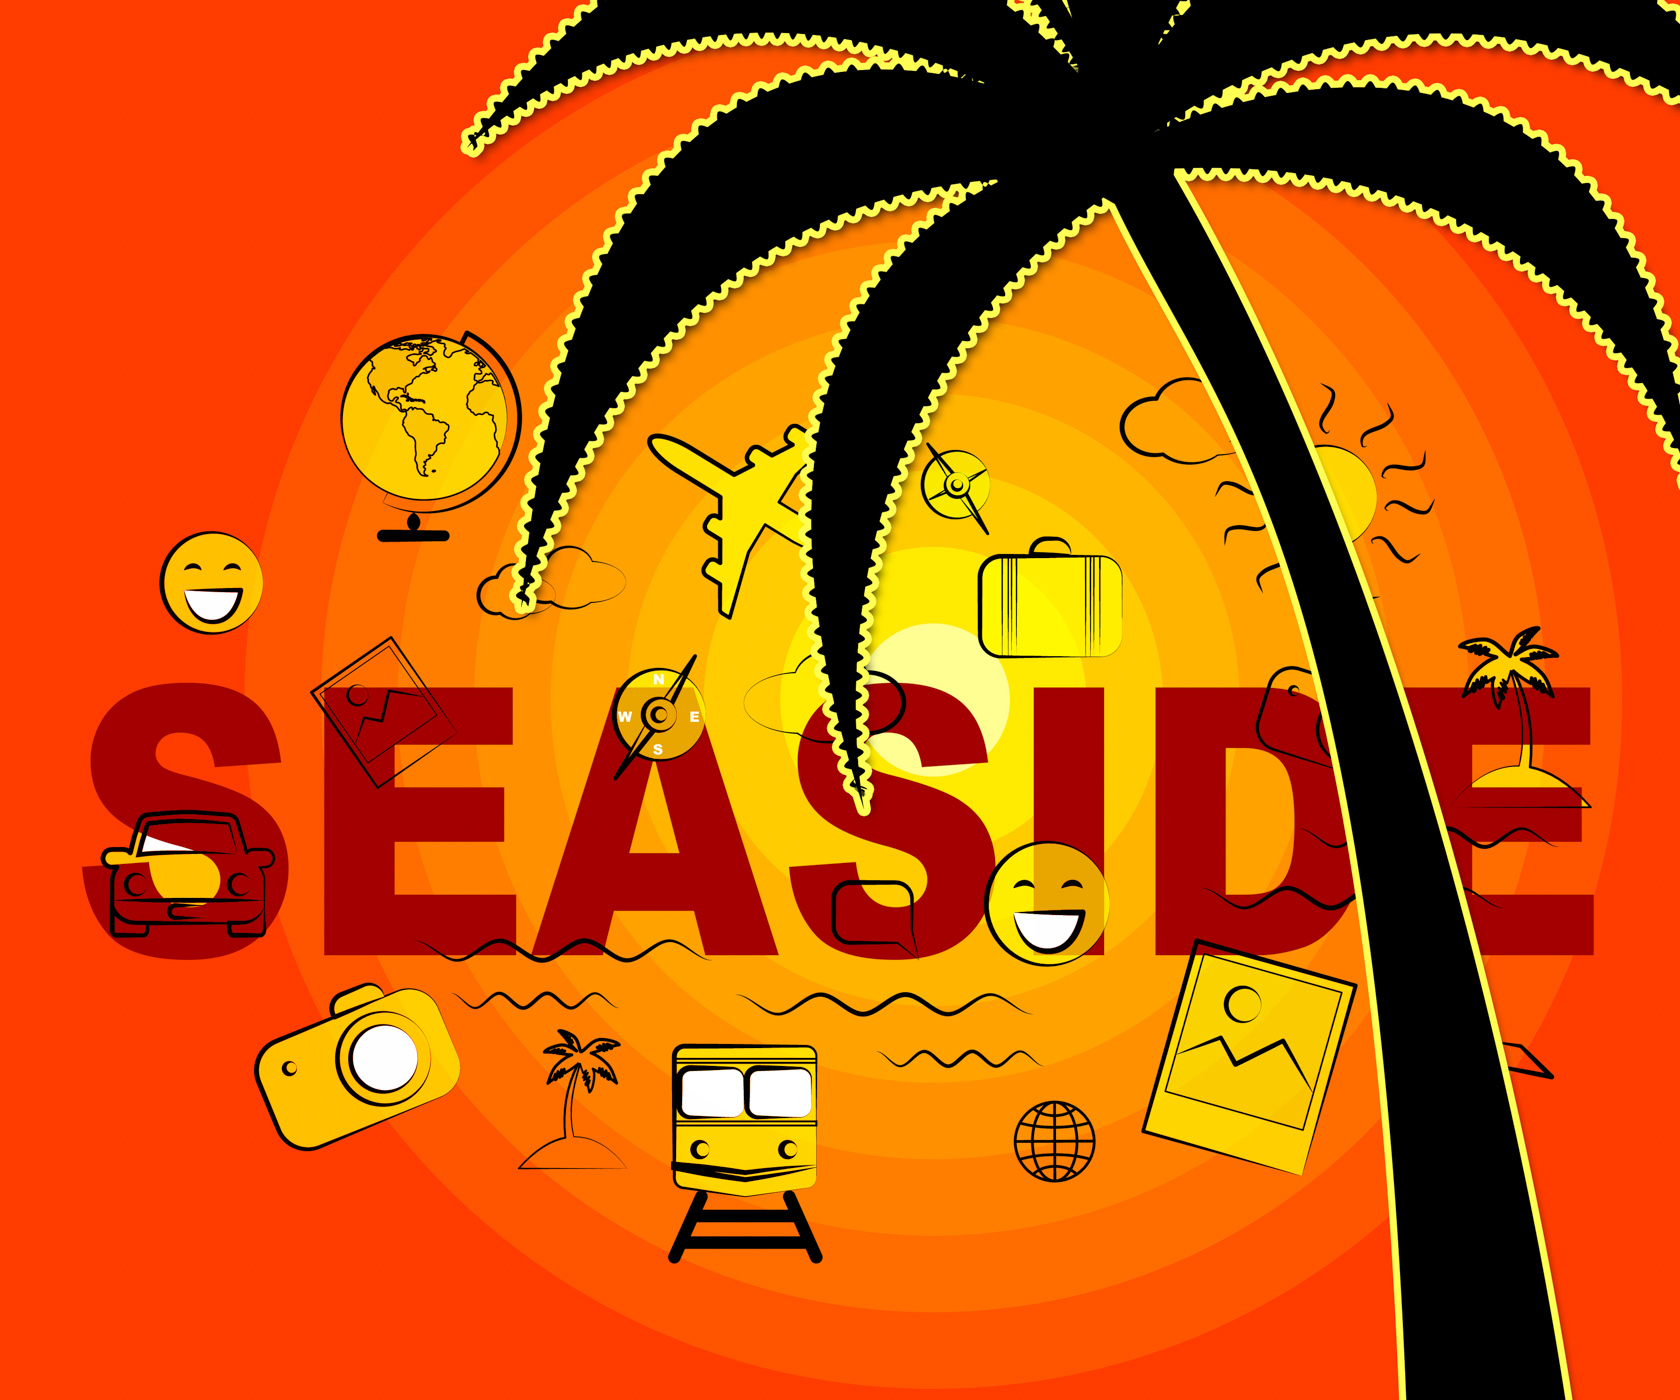 Seaside icons represents beach holidays and vacationing photo